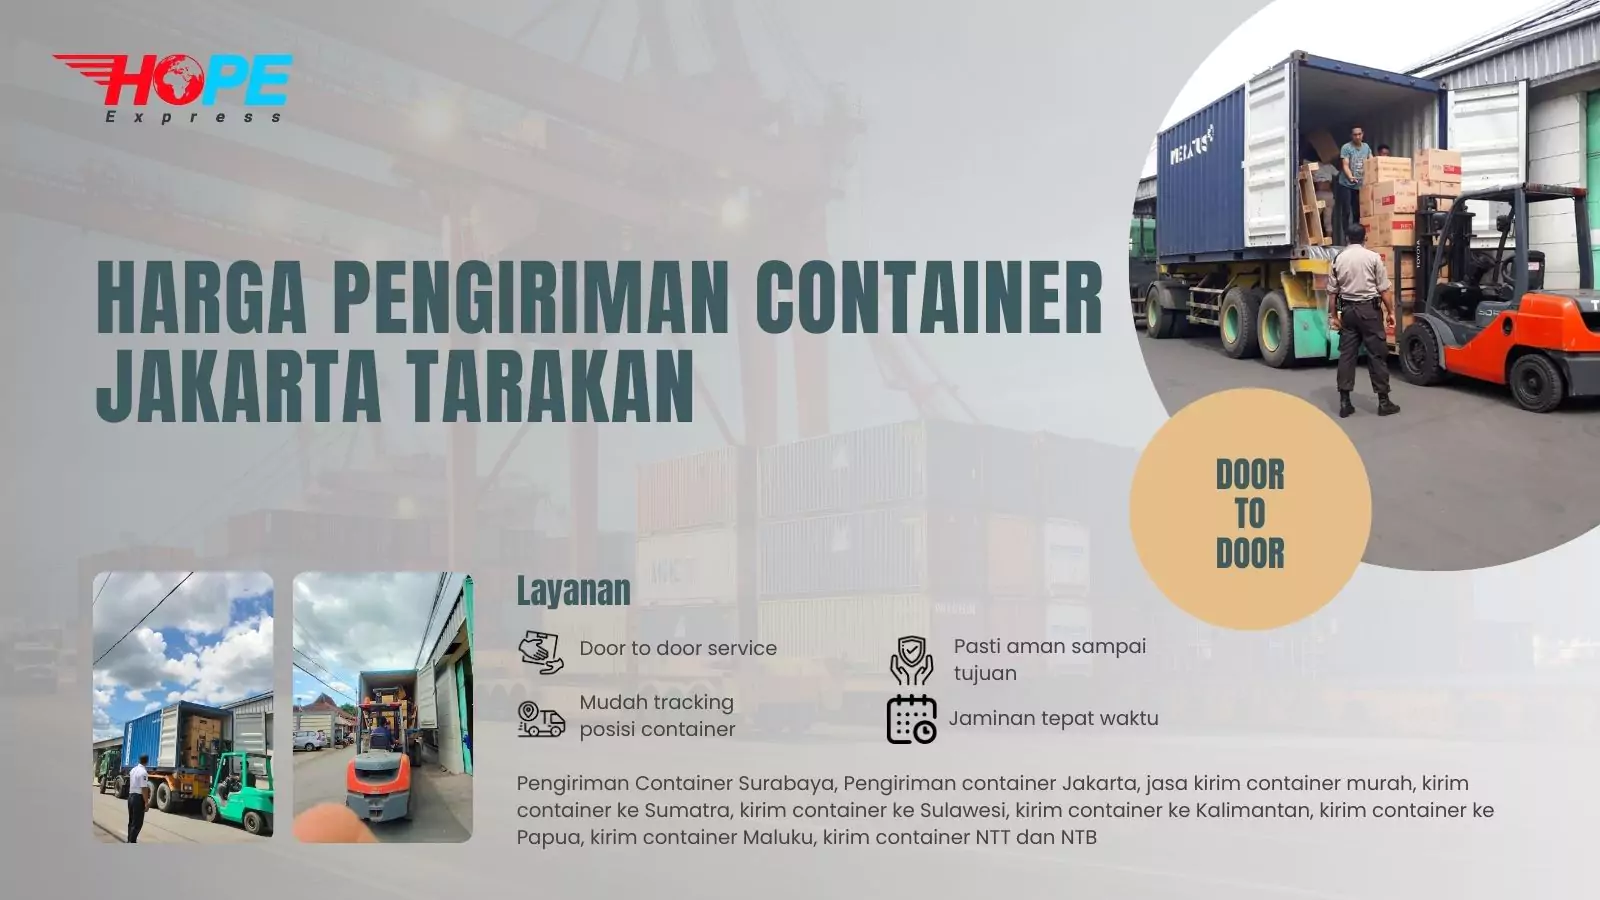 Harga Pengiriman Container Jakarta Tarakan